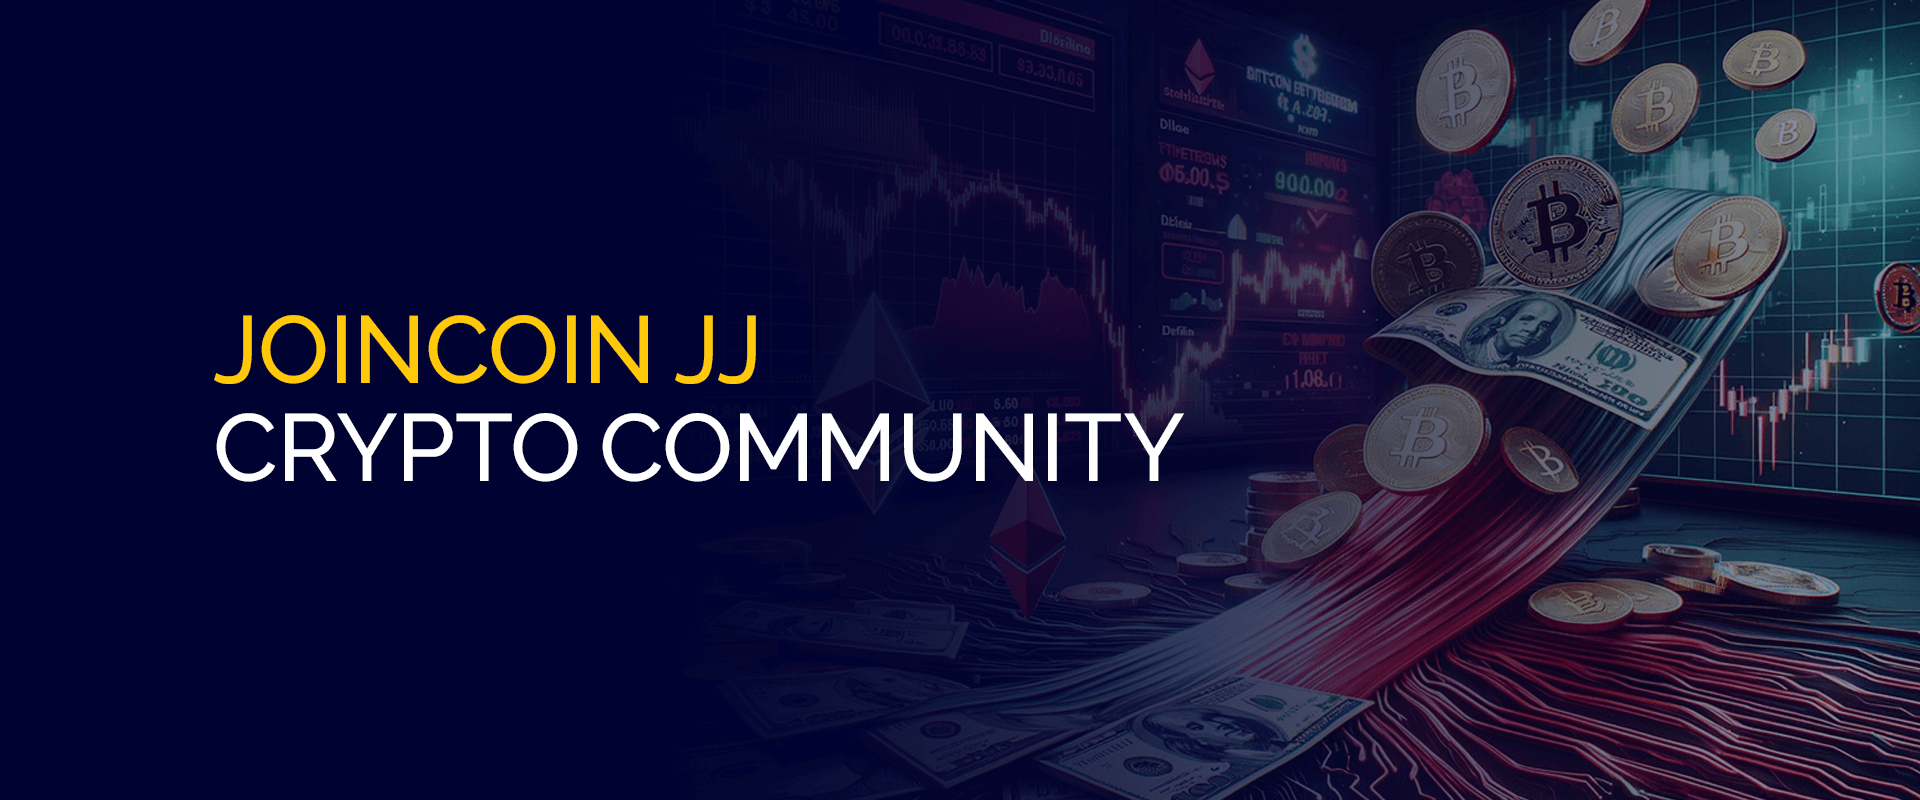 Joincoin JJ Crypto Gemeinschaft